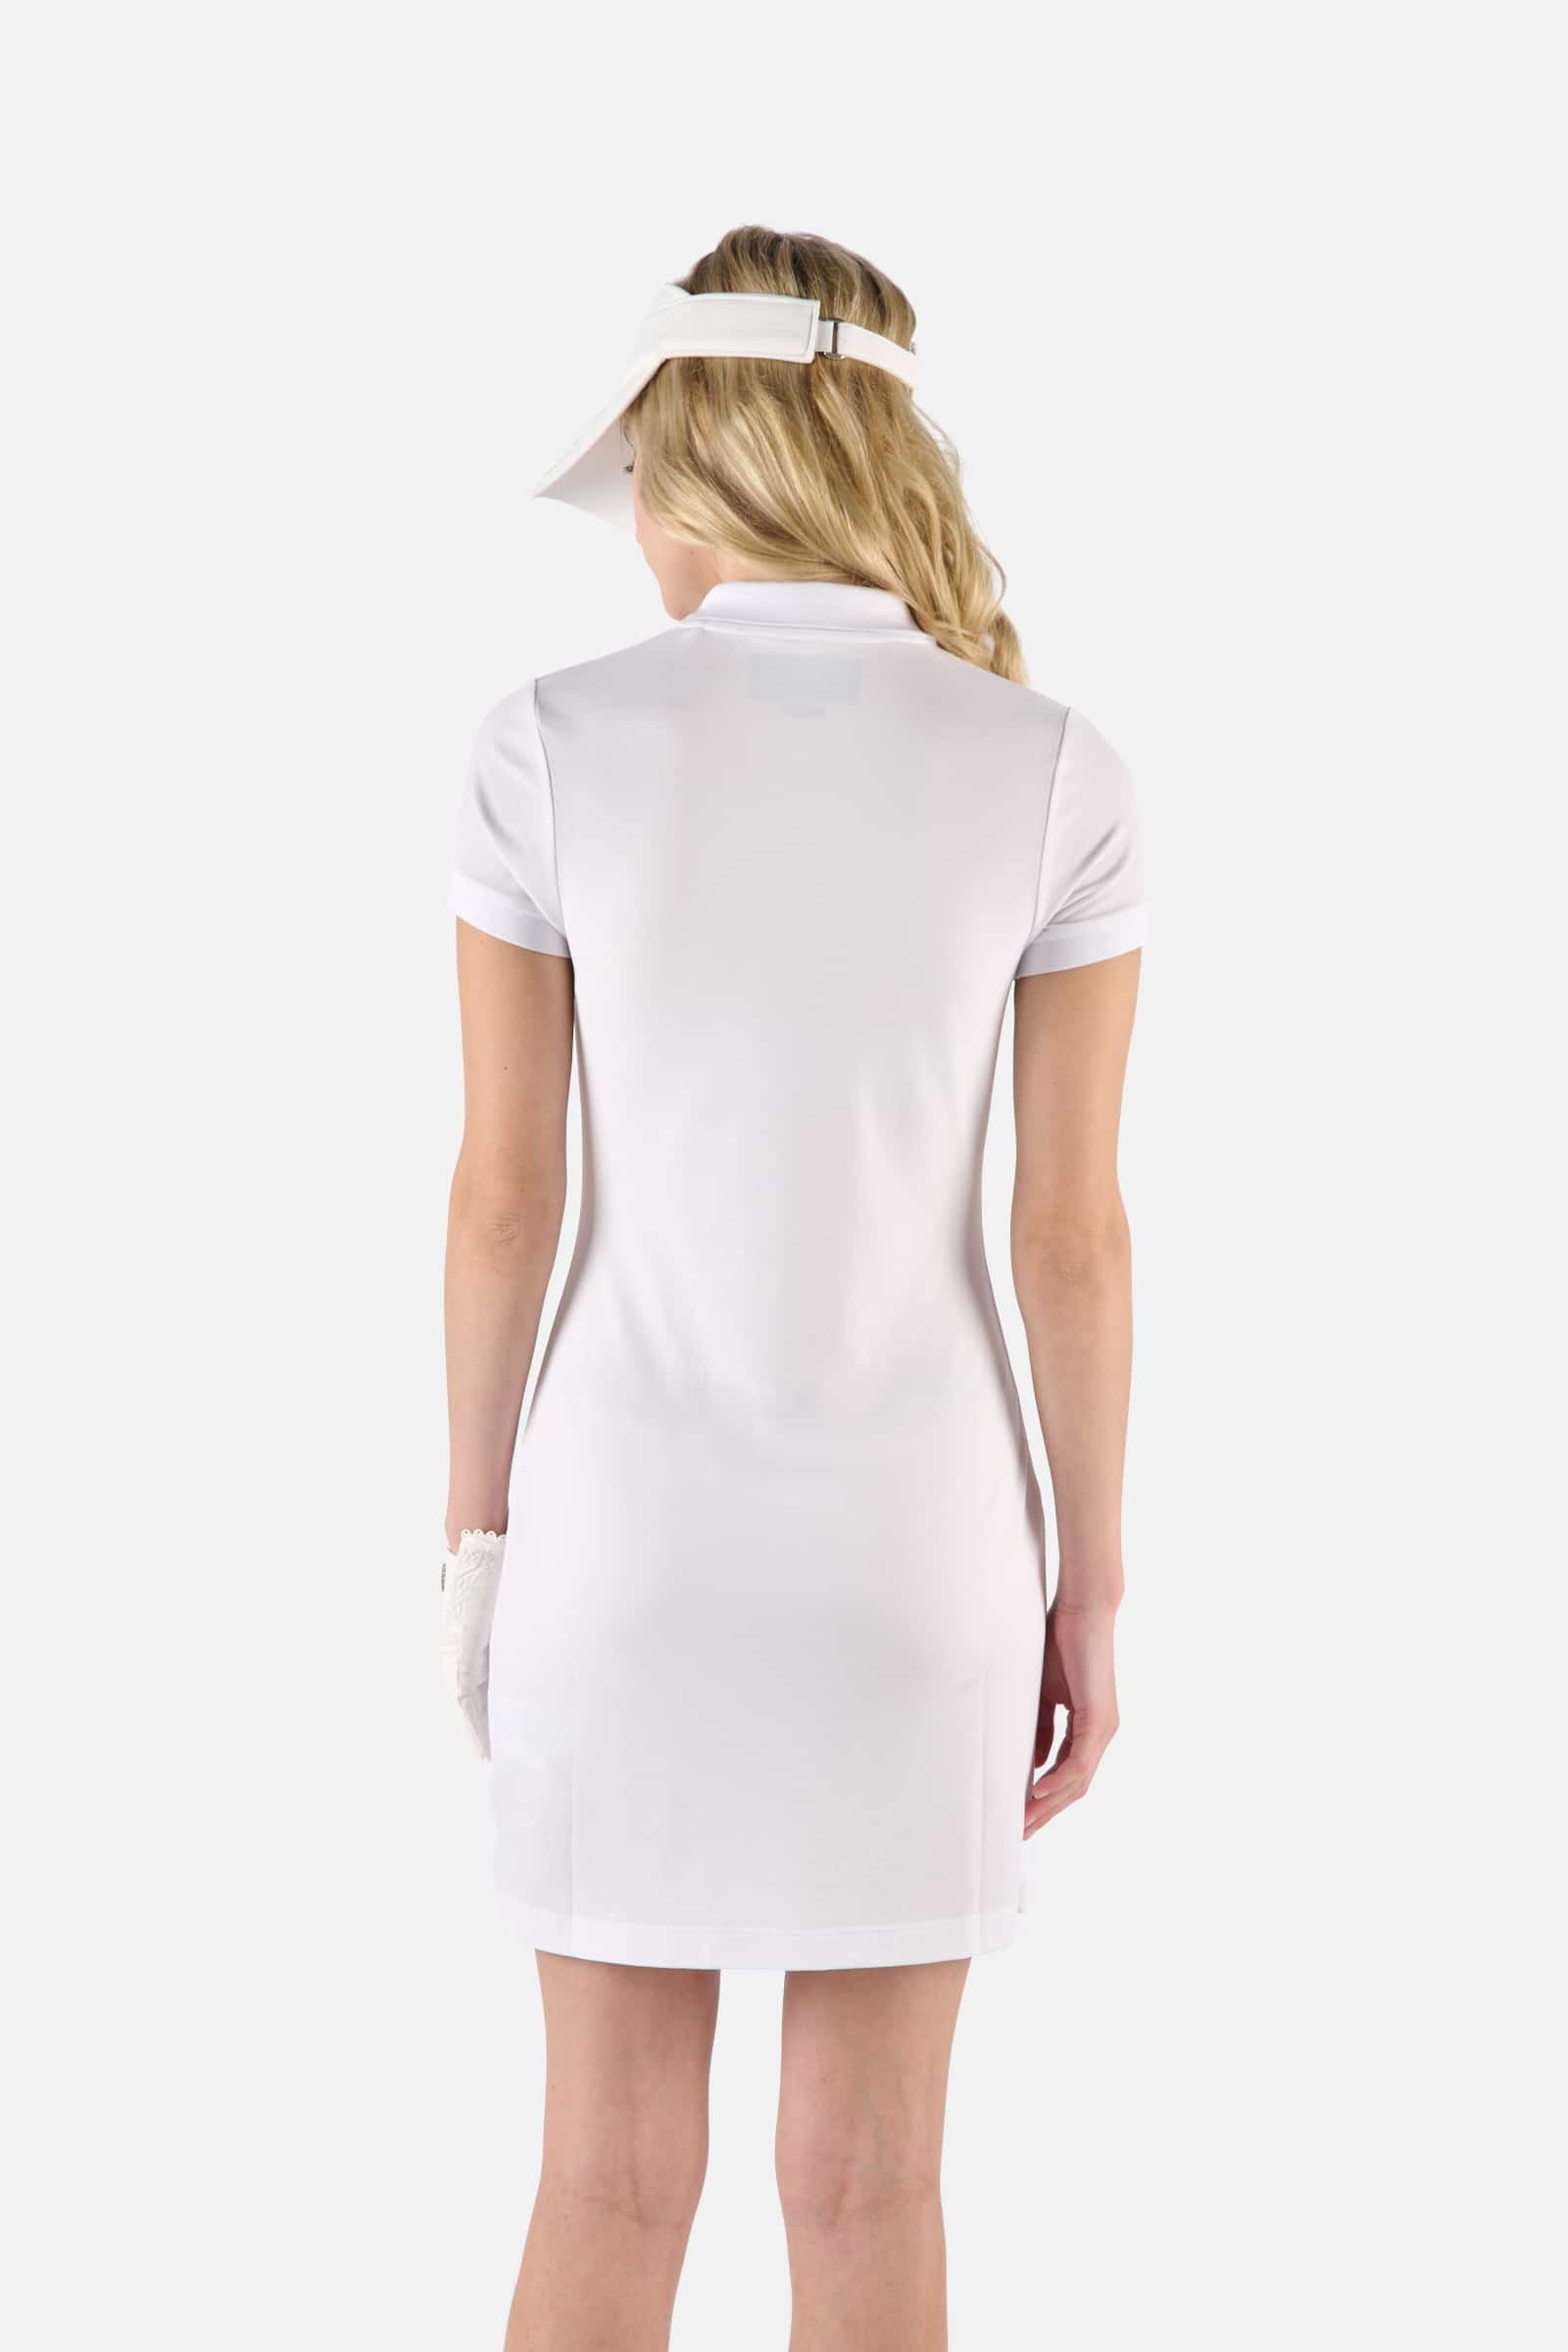 PIQUET DRESS - WHITE - Hydrogen - Luxury Sportwear